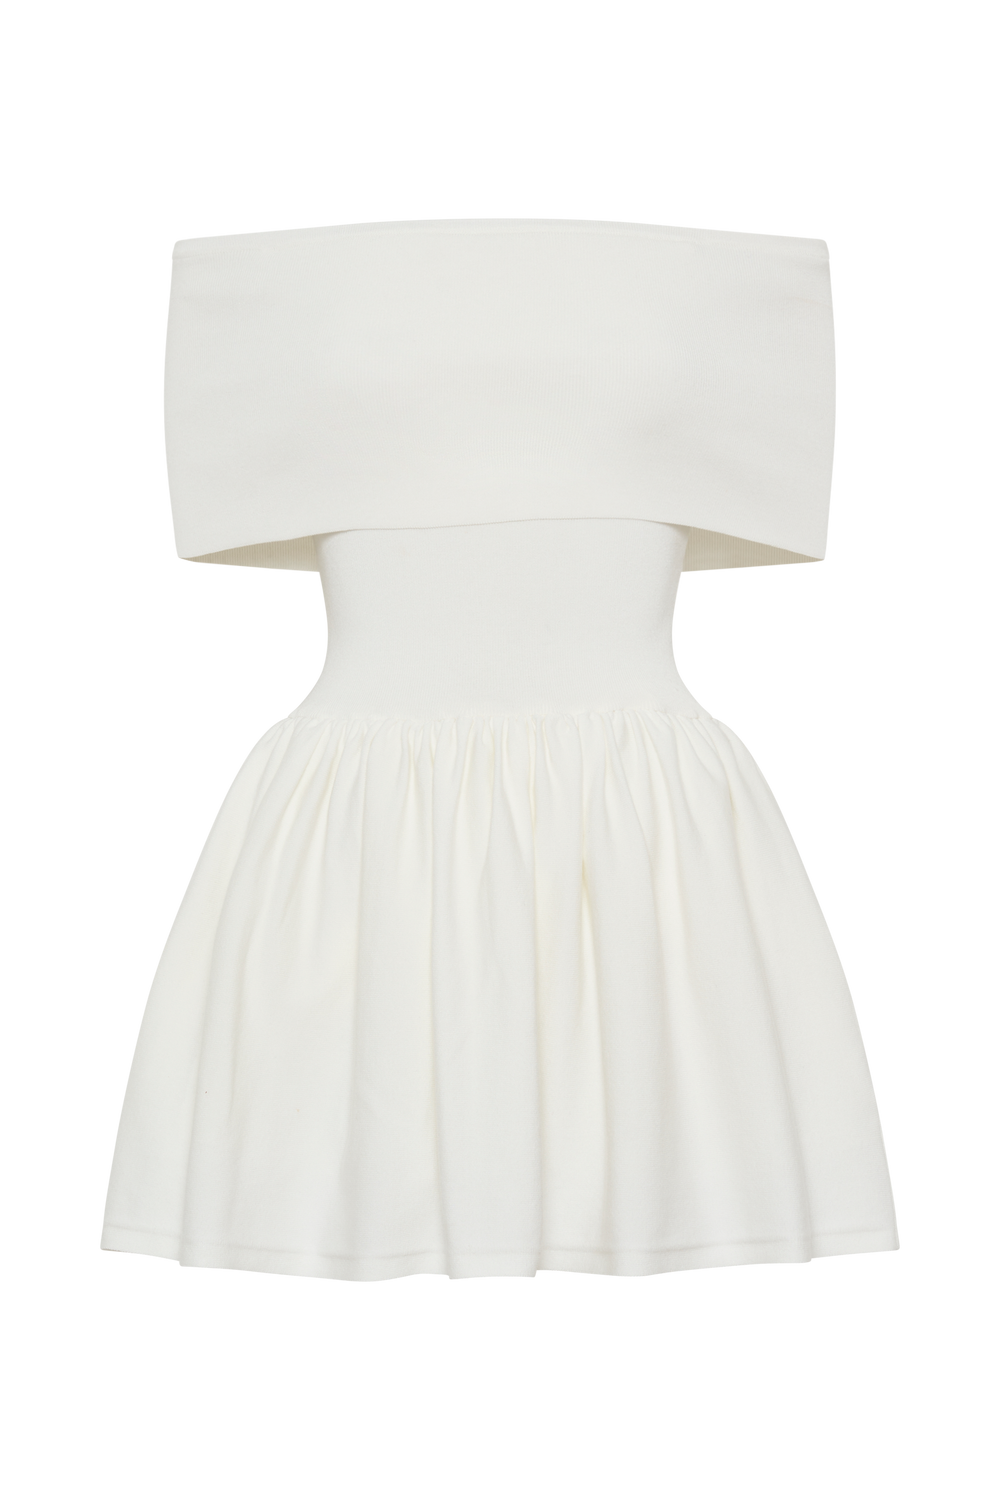 Lydia Off Shoulder Knit Mini Dress - White